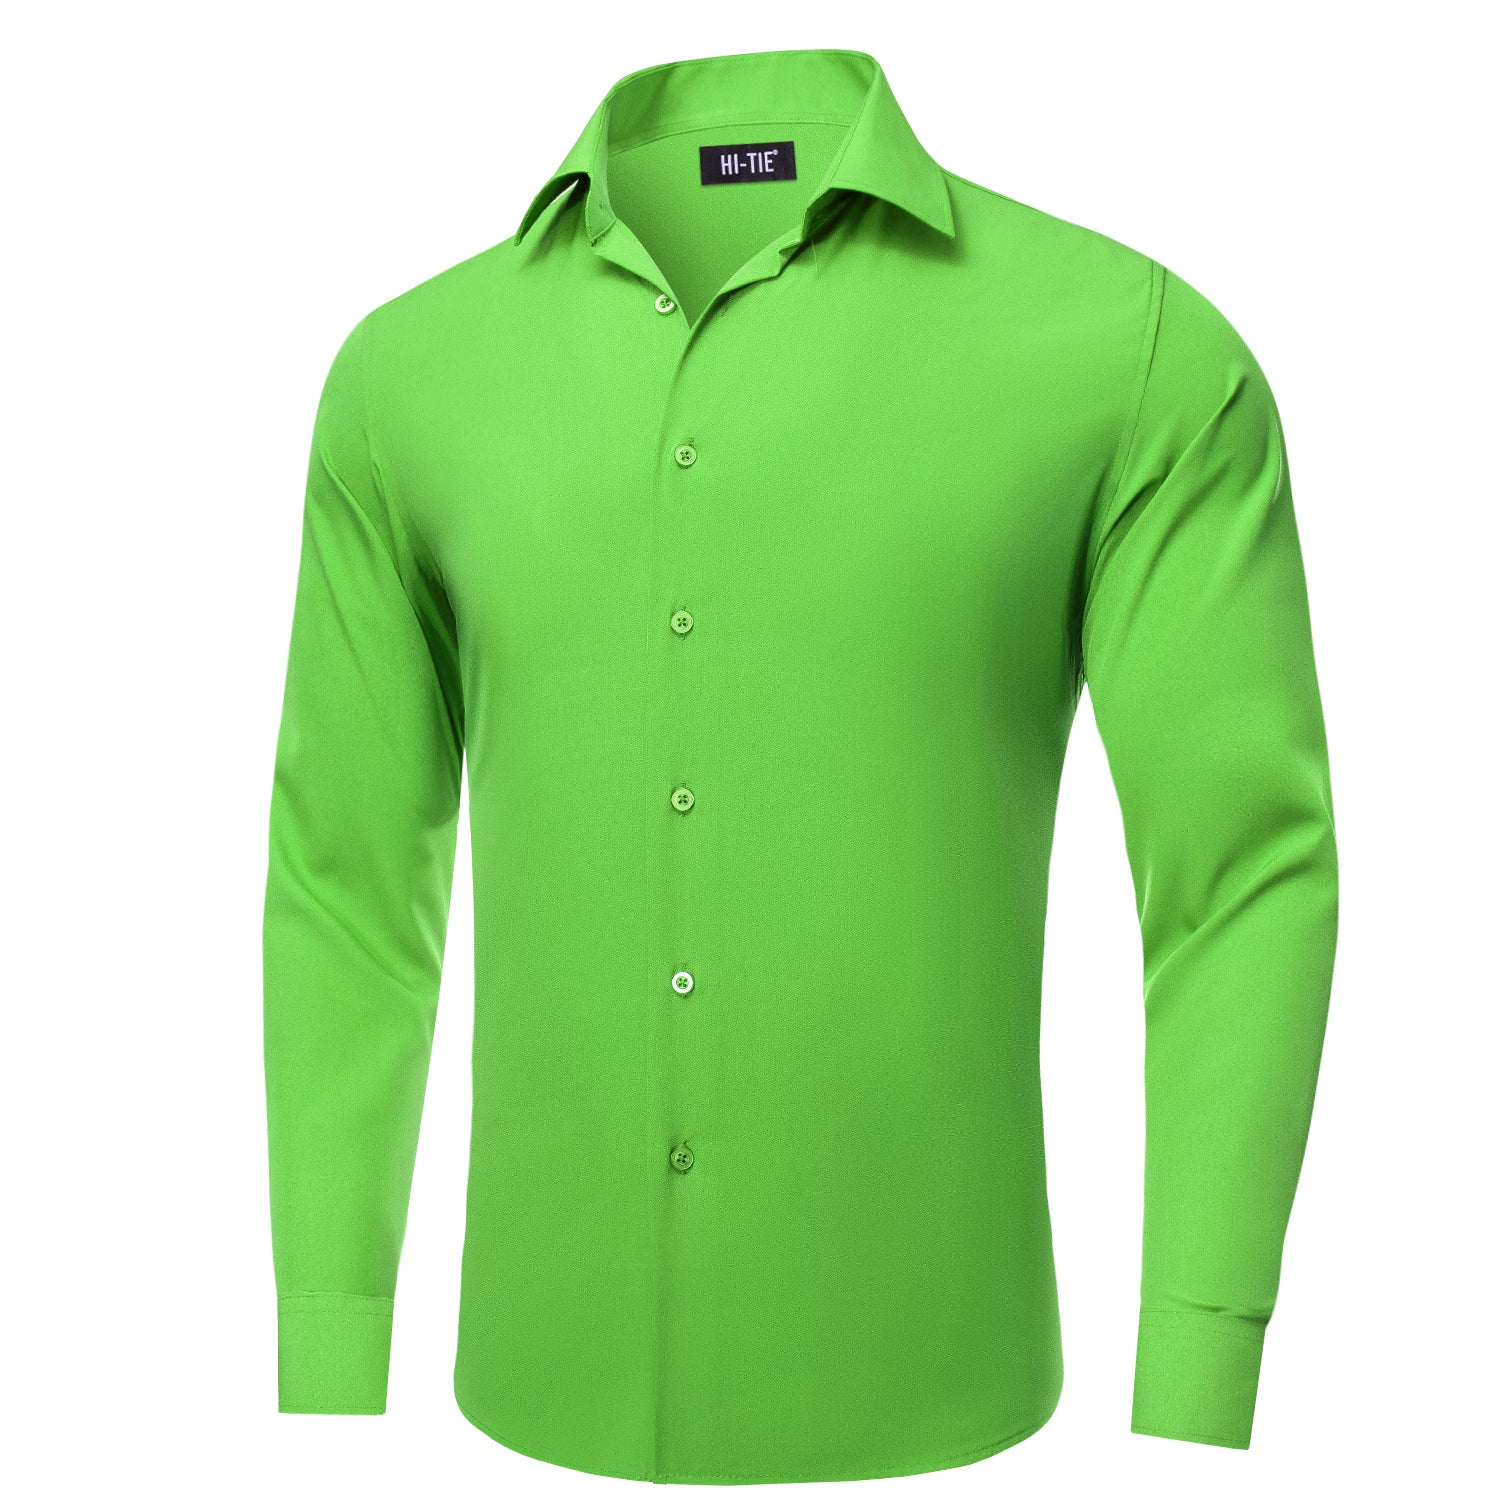 Hi-Tie Long Sleeve Shirt Green Solid Casual Men's Dress Shirt Top Wear